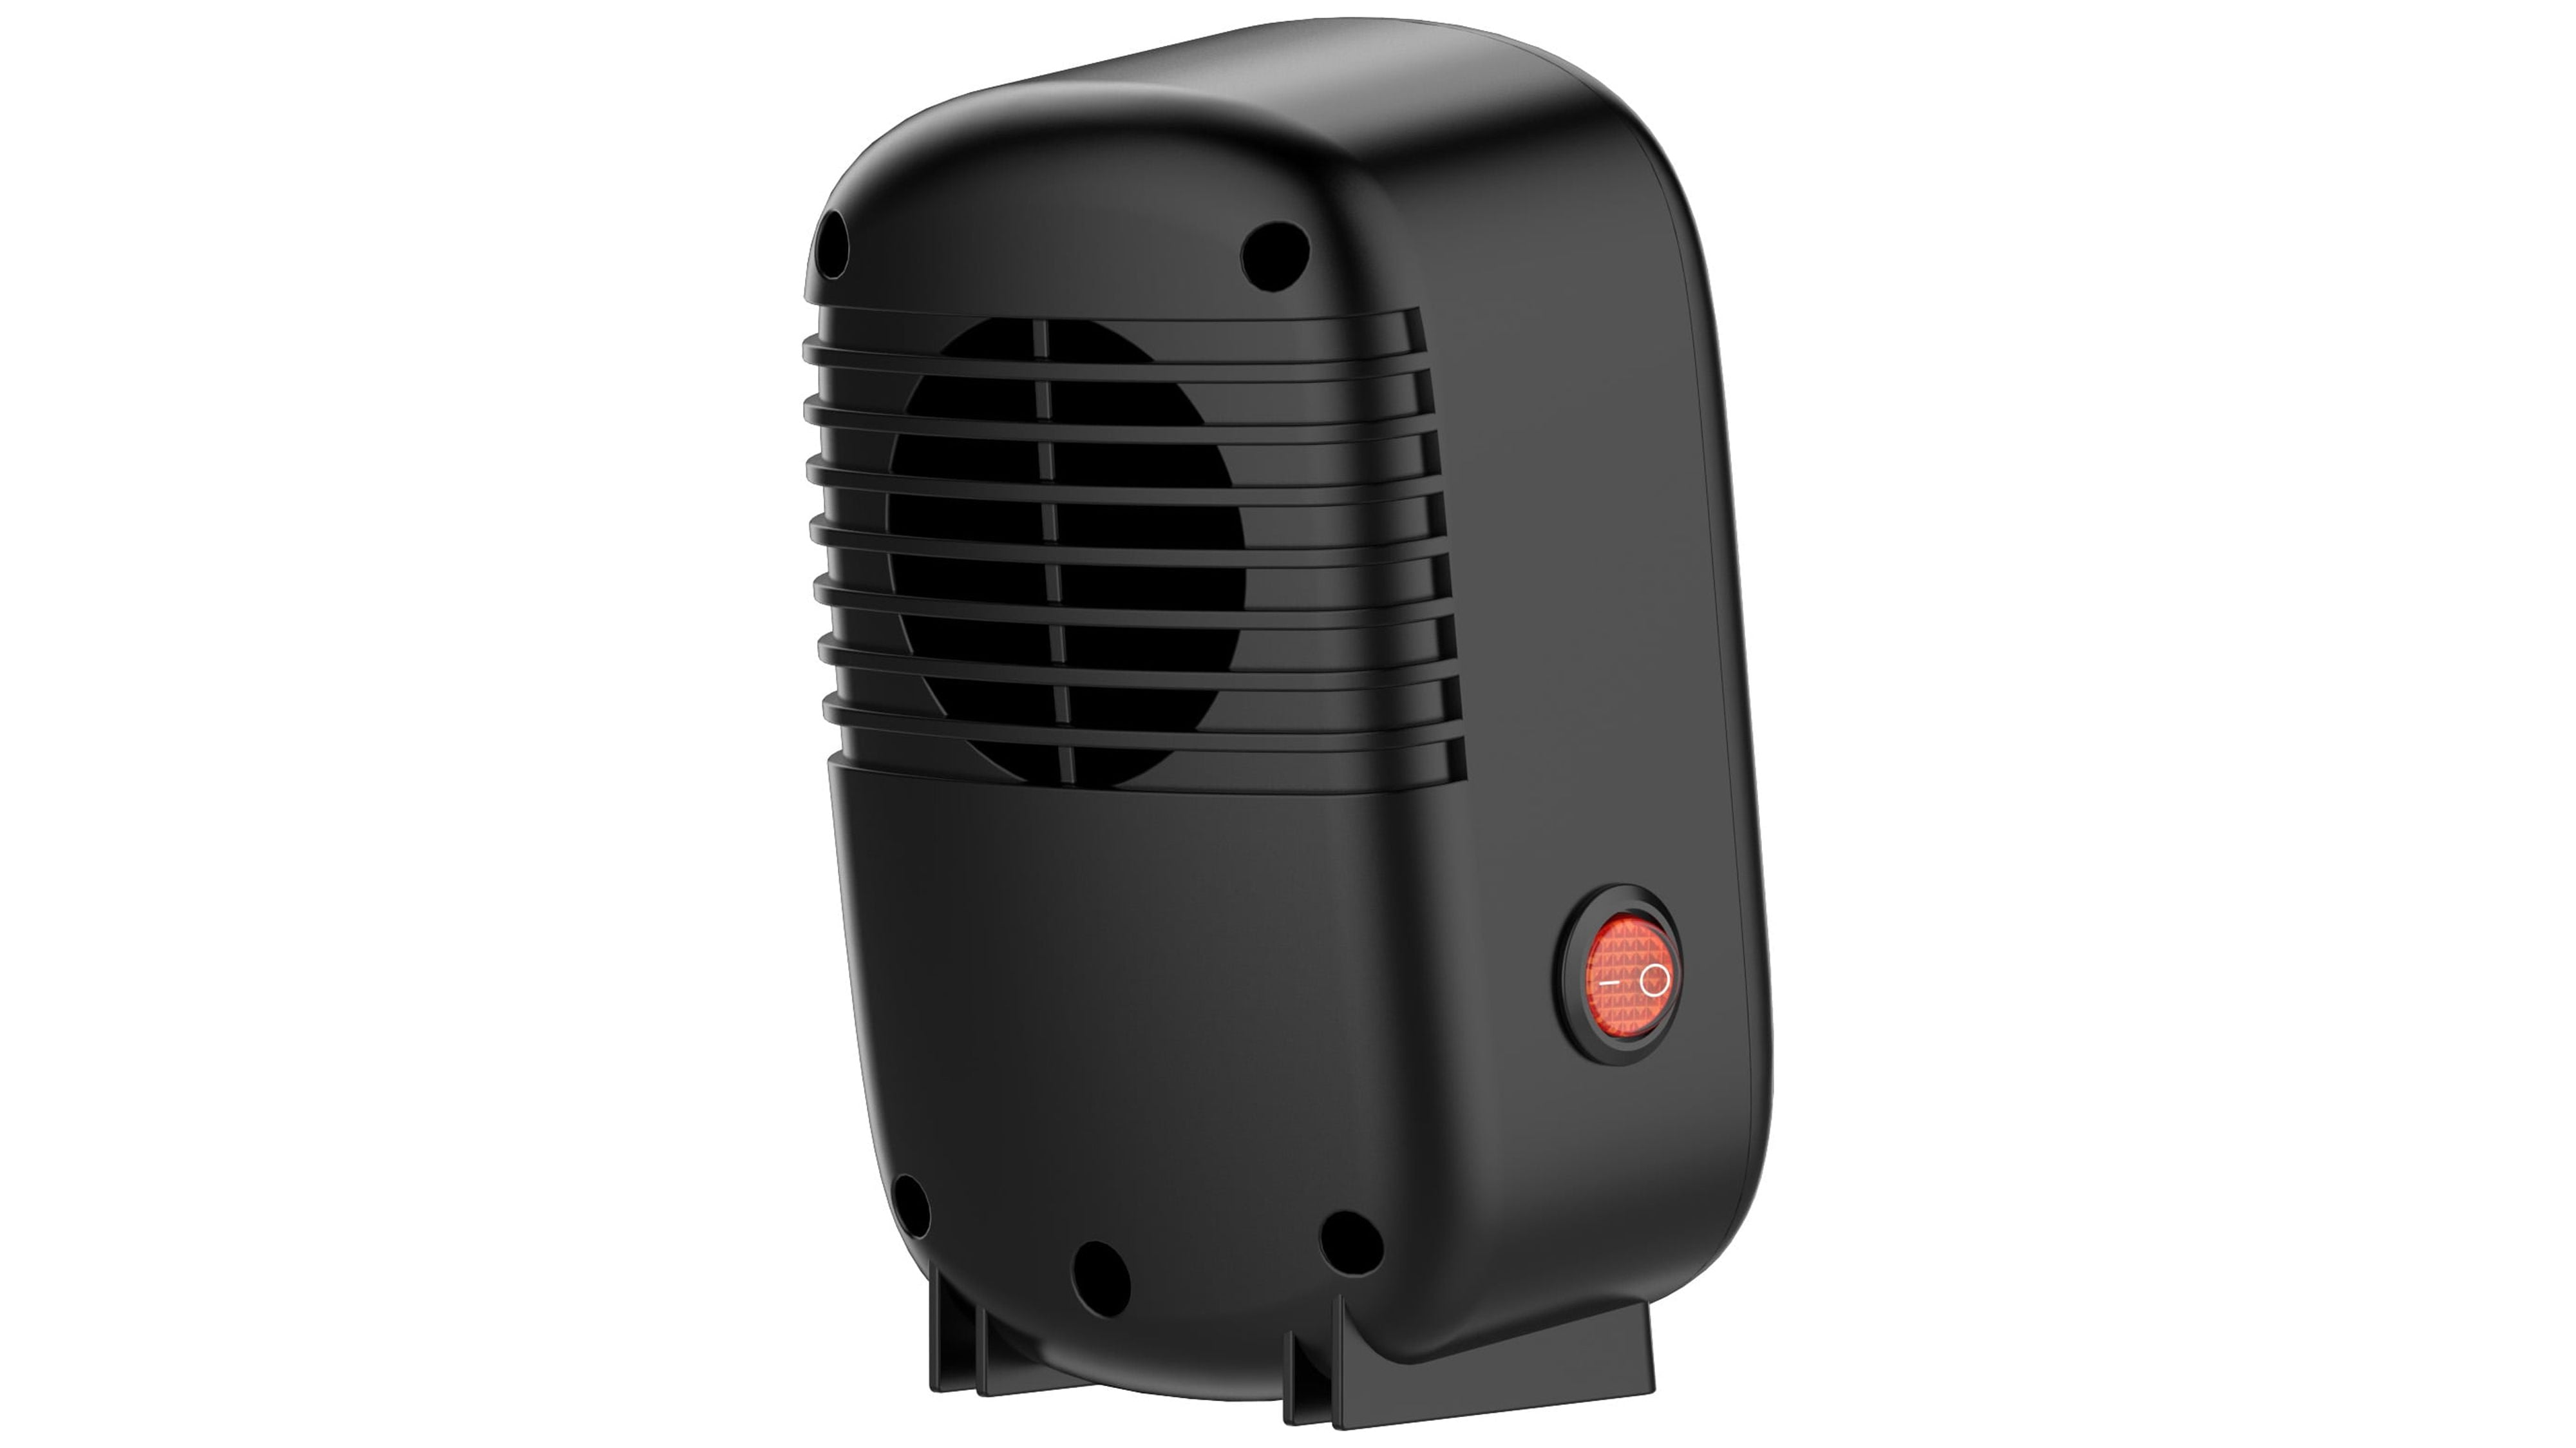 Mainstays Personal Mini Electric Ceramic Heater 400W, Red Sedona 